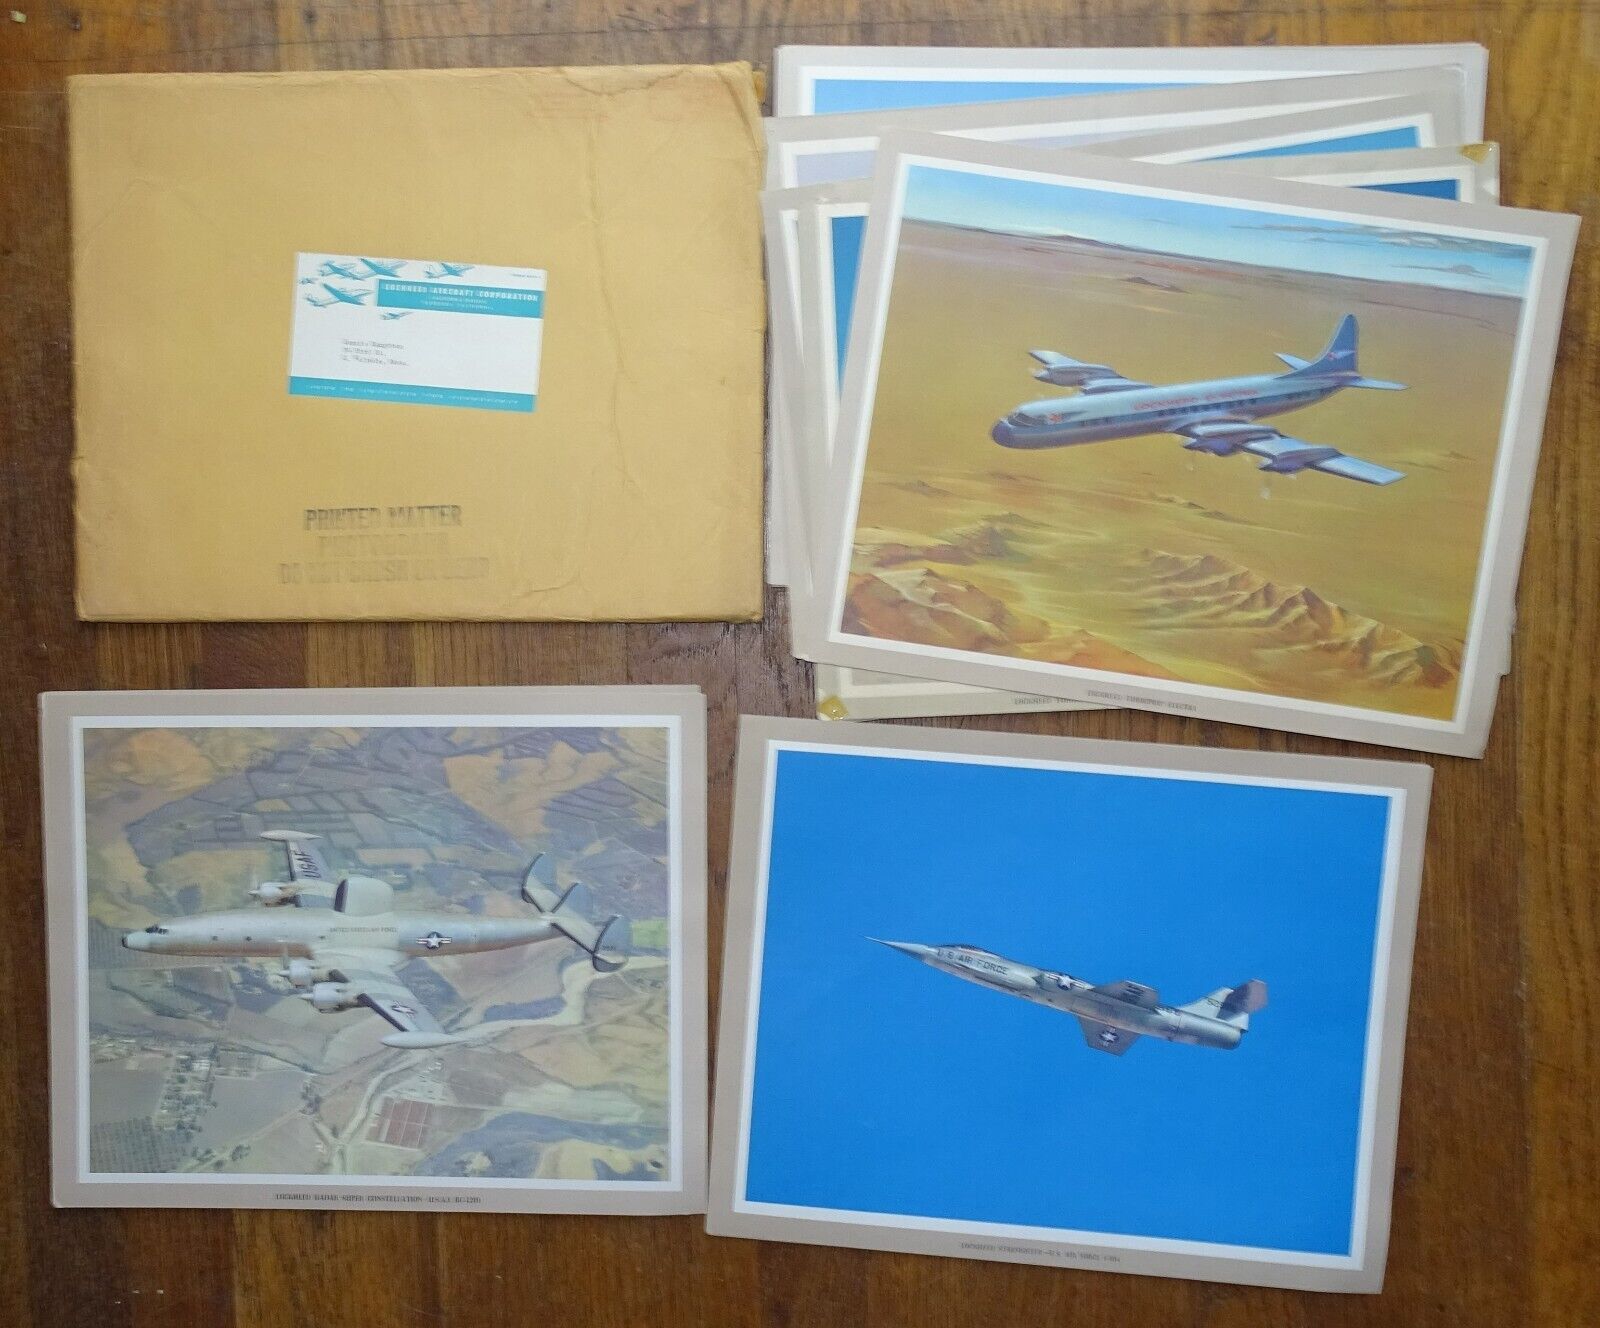 15 1950s Lockheed Aircraft Corporation 11x14 Prints in original mailing envelope